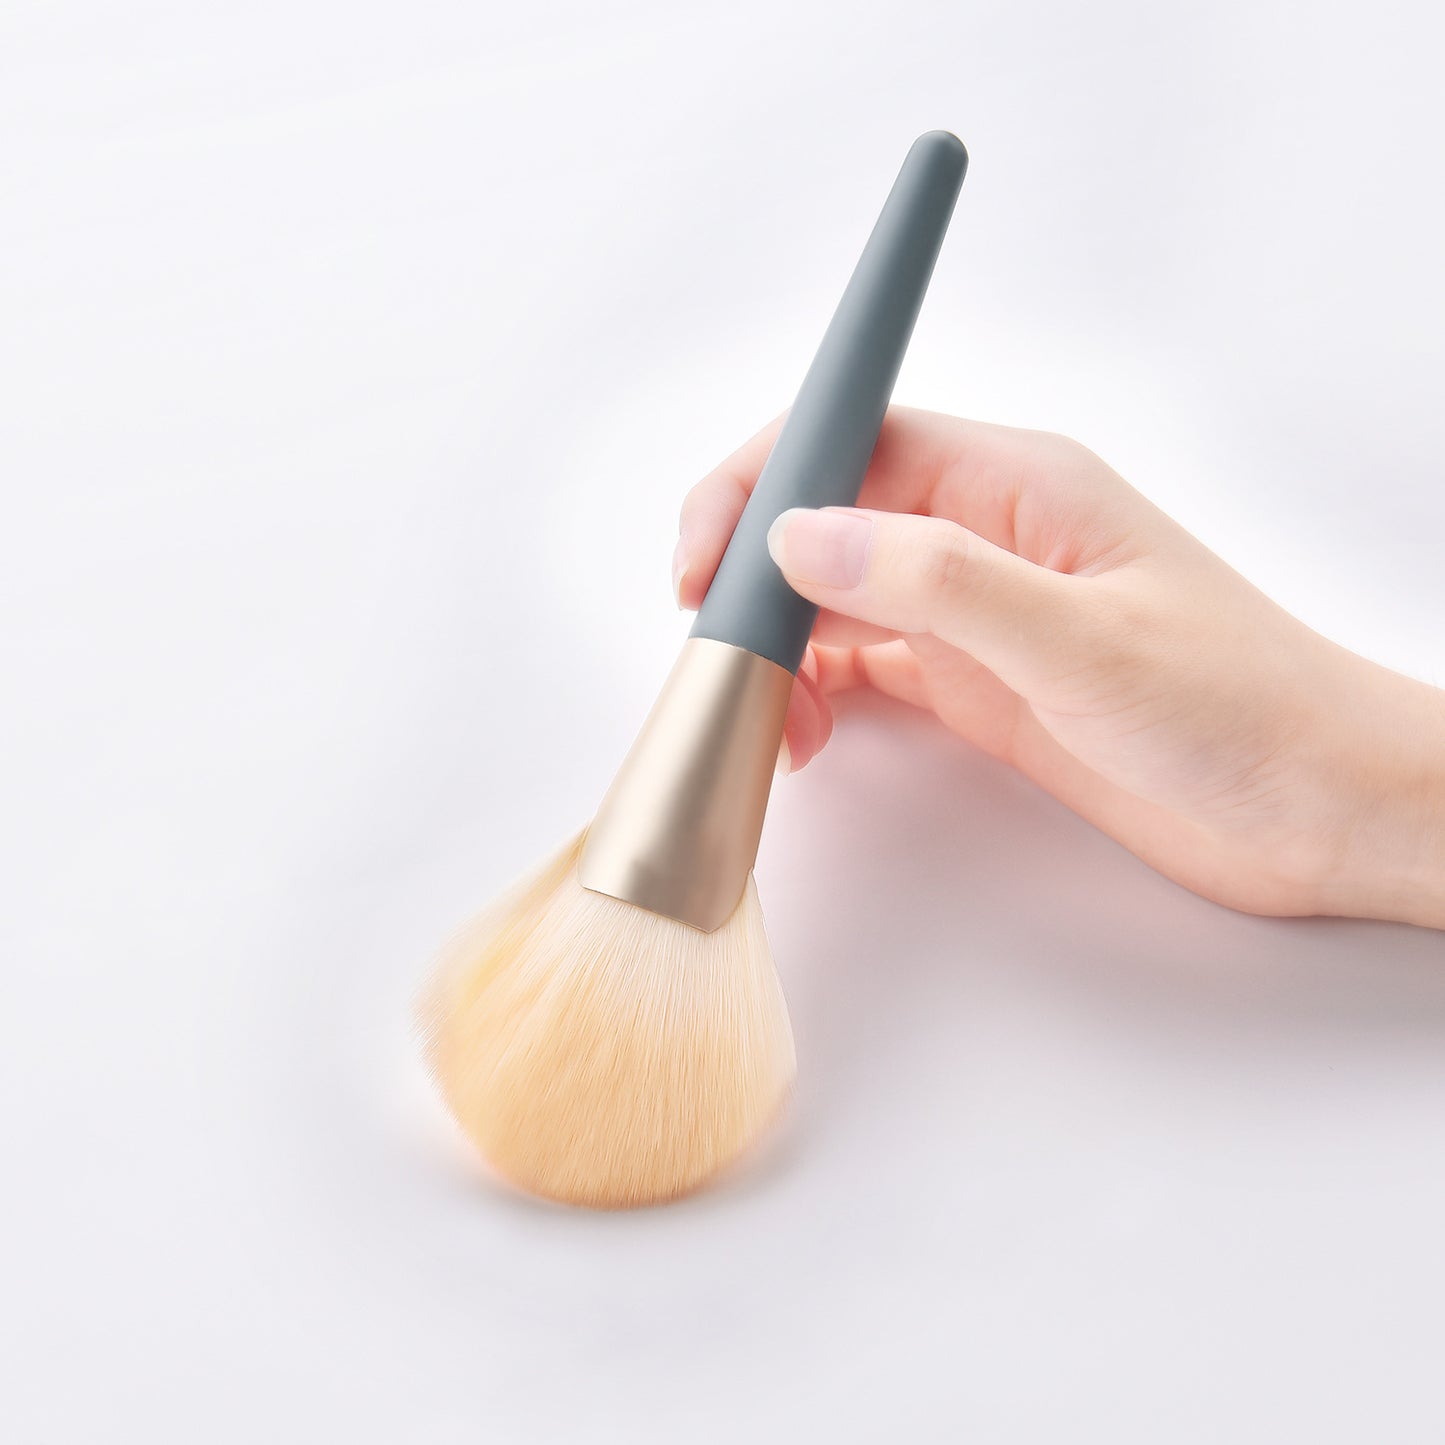 Beauty tools makeup brush